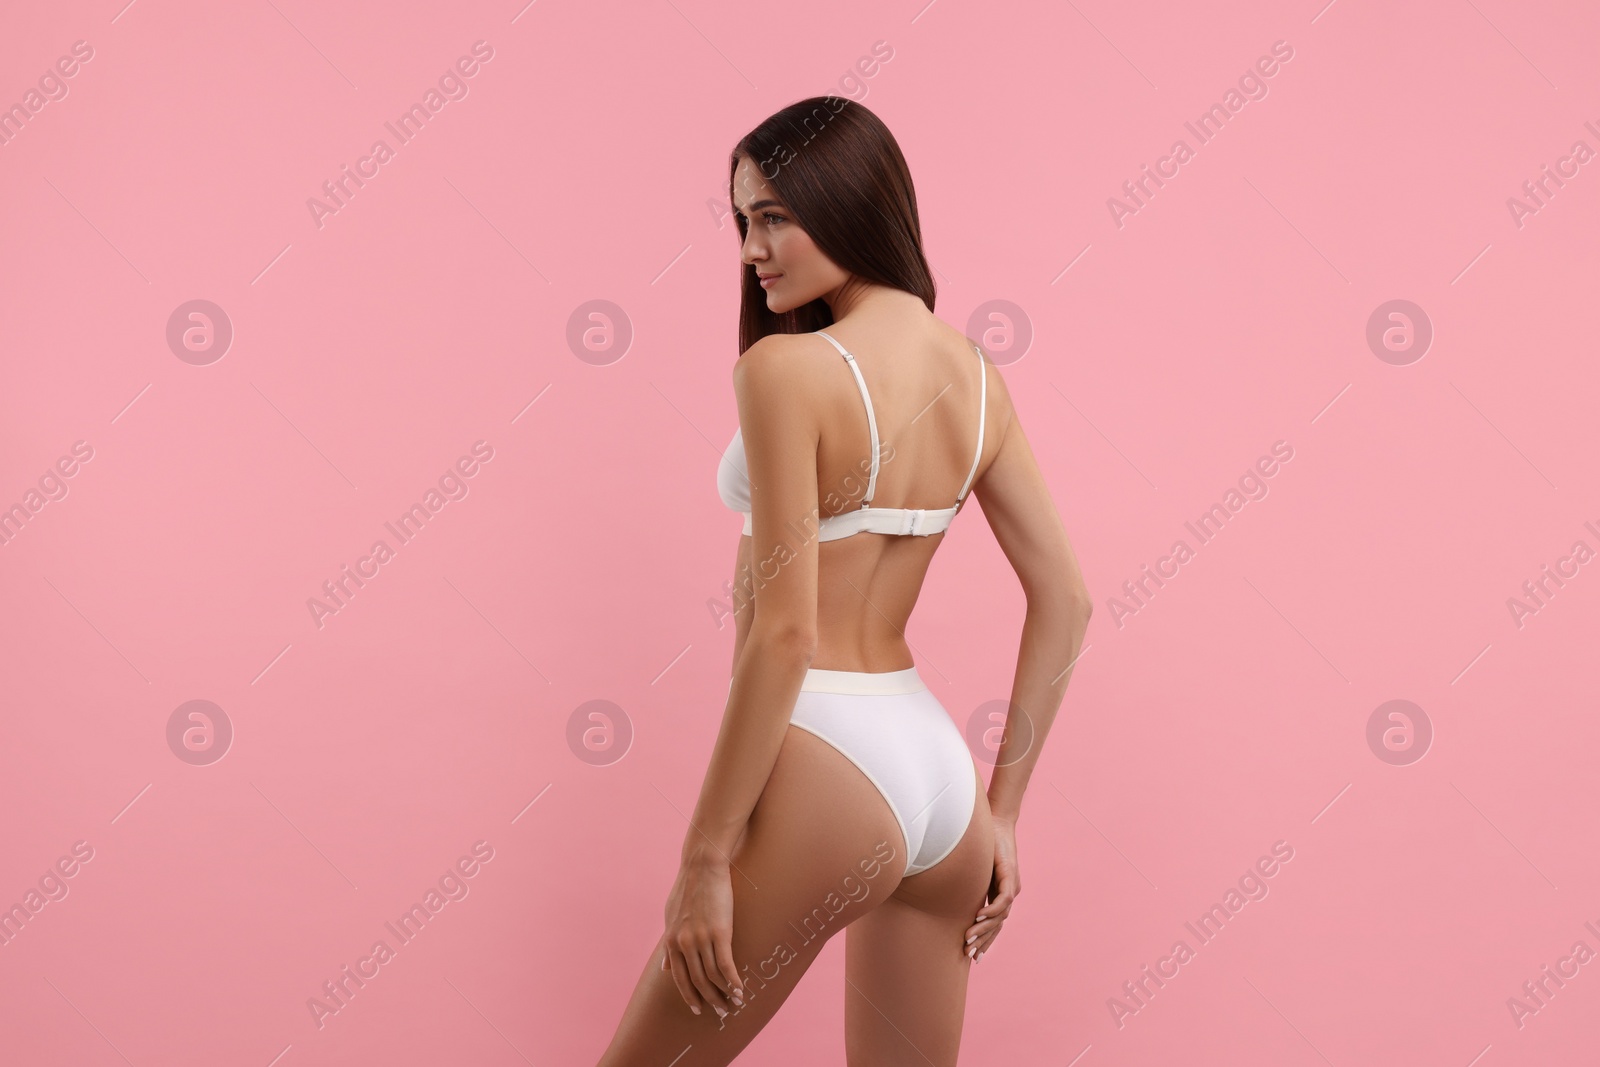 Photo of Young woman in stylish white bikini on pink background